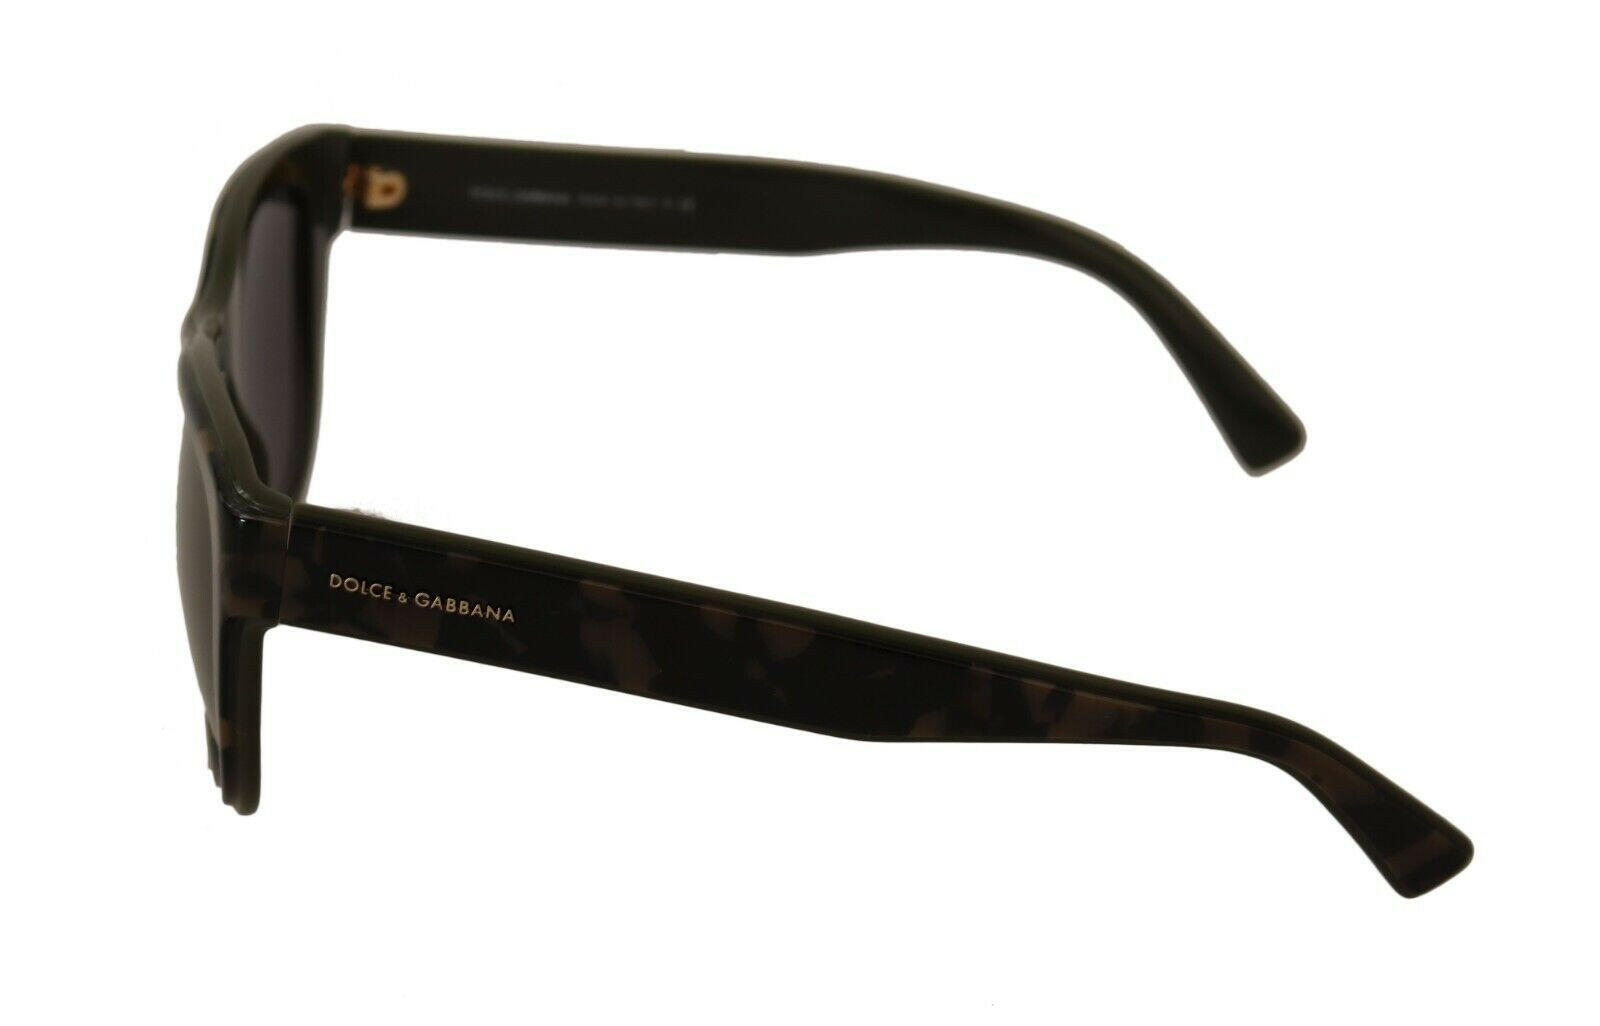 Dolce & Gabbana Brown Mirror Lens Plastic Full Rim Sunglasses - GENUINE AUTHENTIC BRAND LLC  